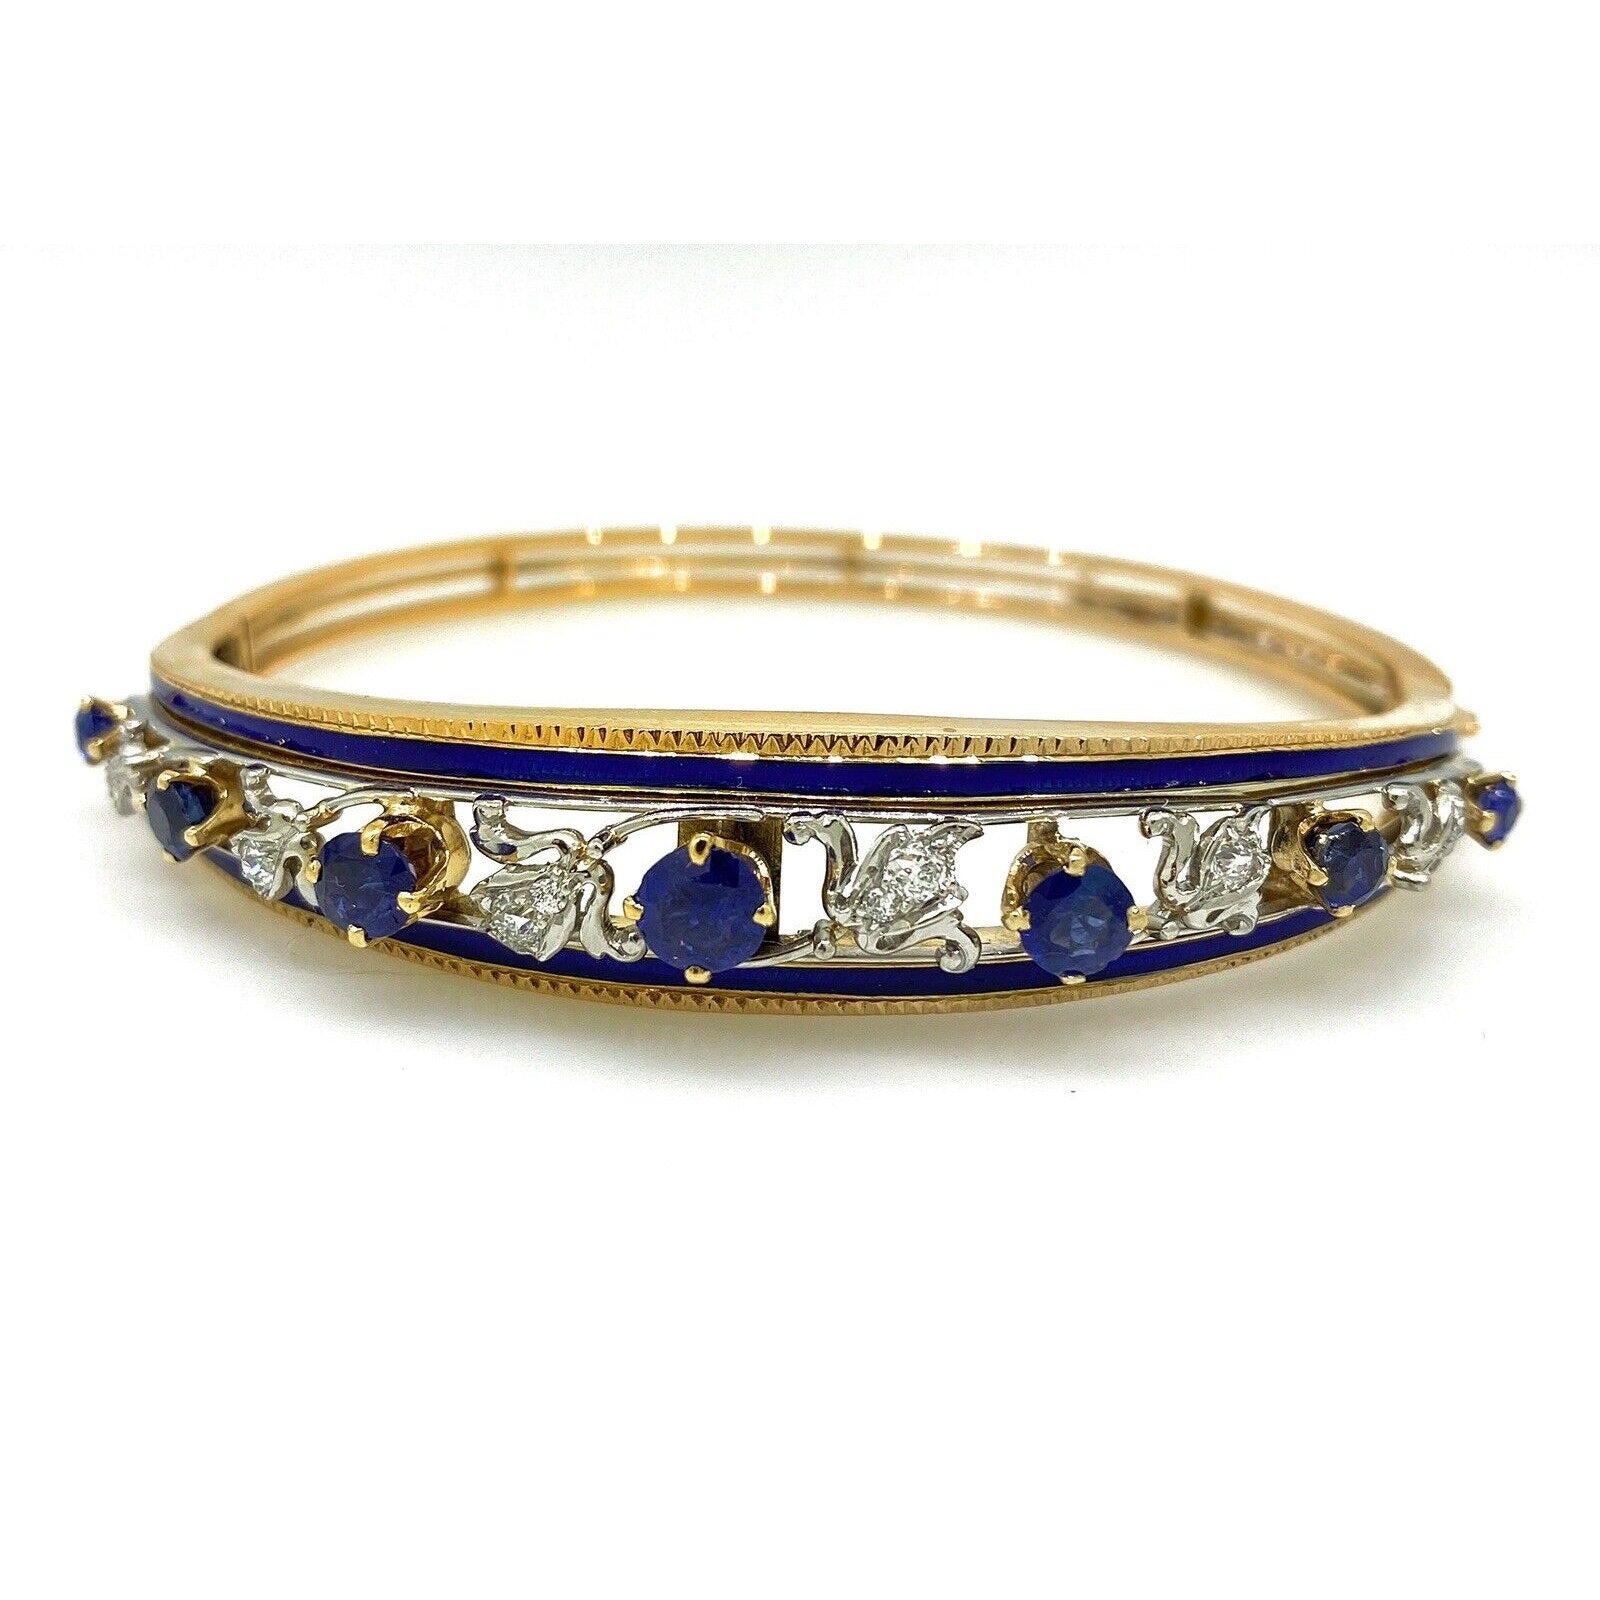 Vintage Diamond, Sapphire and Enamel Bangle Bracelet in 14k Gold